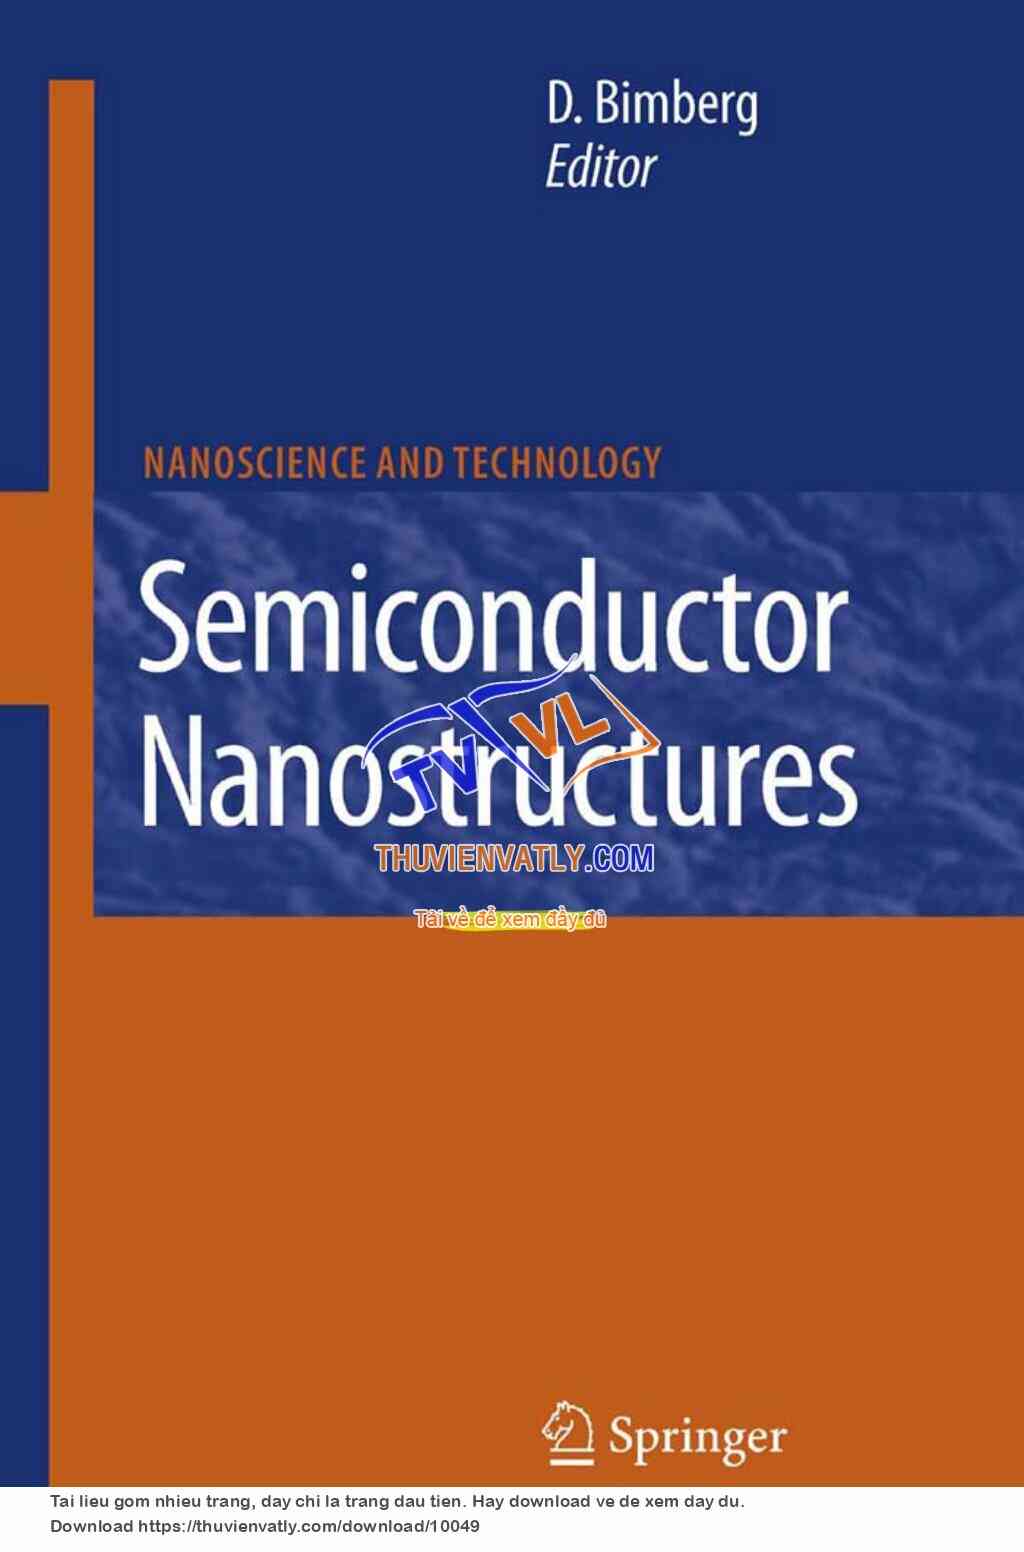 Semconductor-Nanostructures